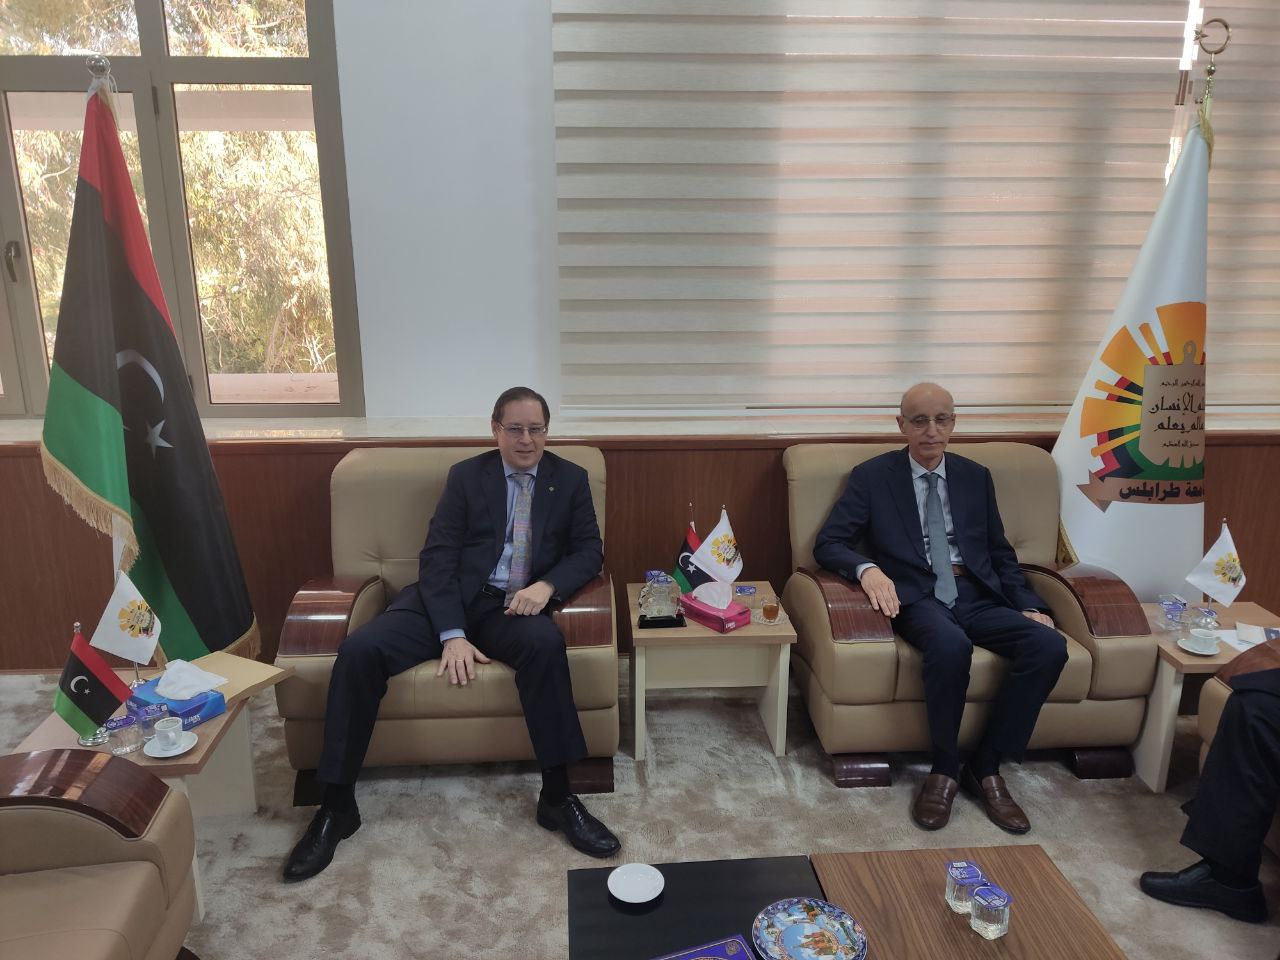 Посол России в Ливии Айдар Аганин и ректор университета Триполи Халед Оун